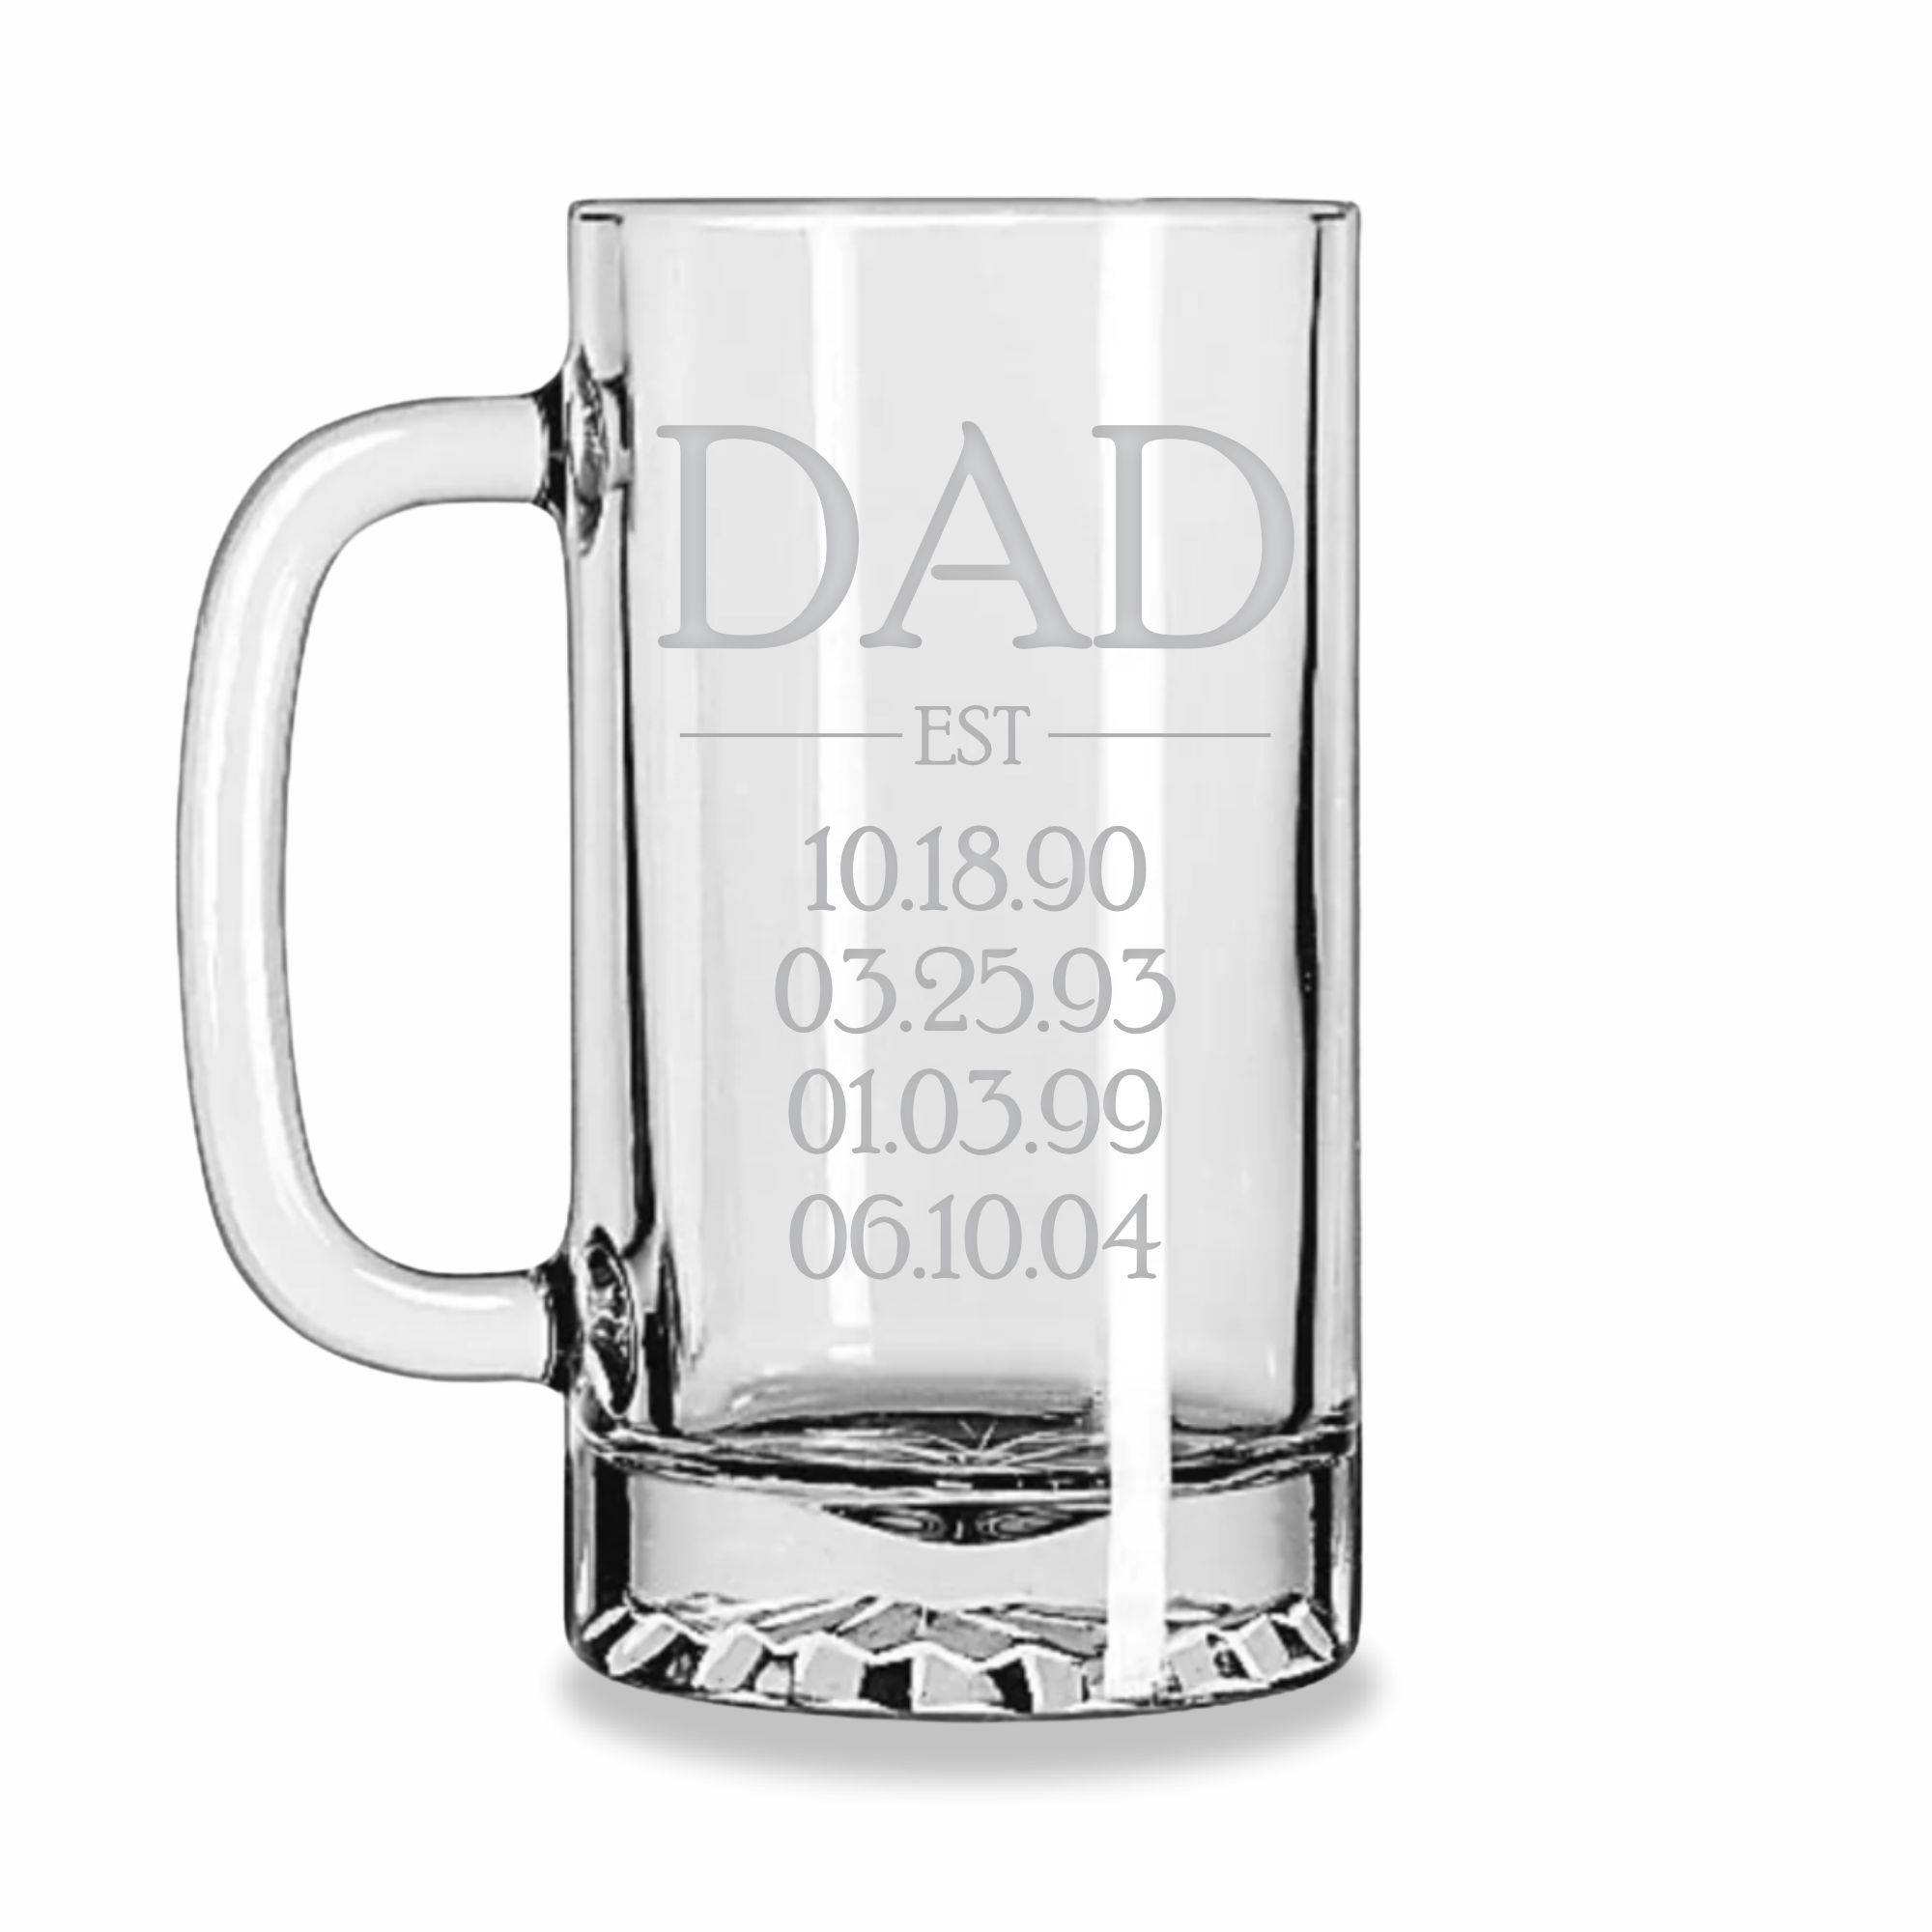 Dad Est | Personalized 16oz Beer Mug